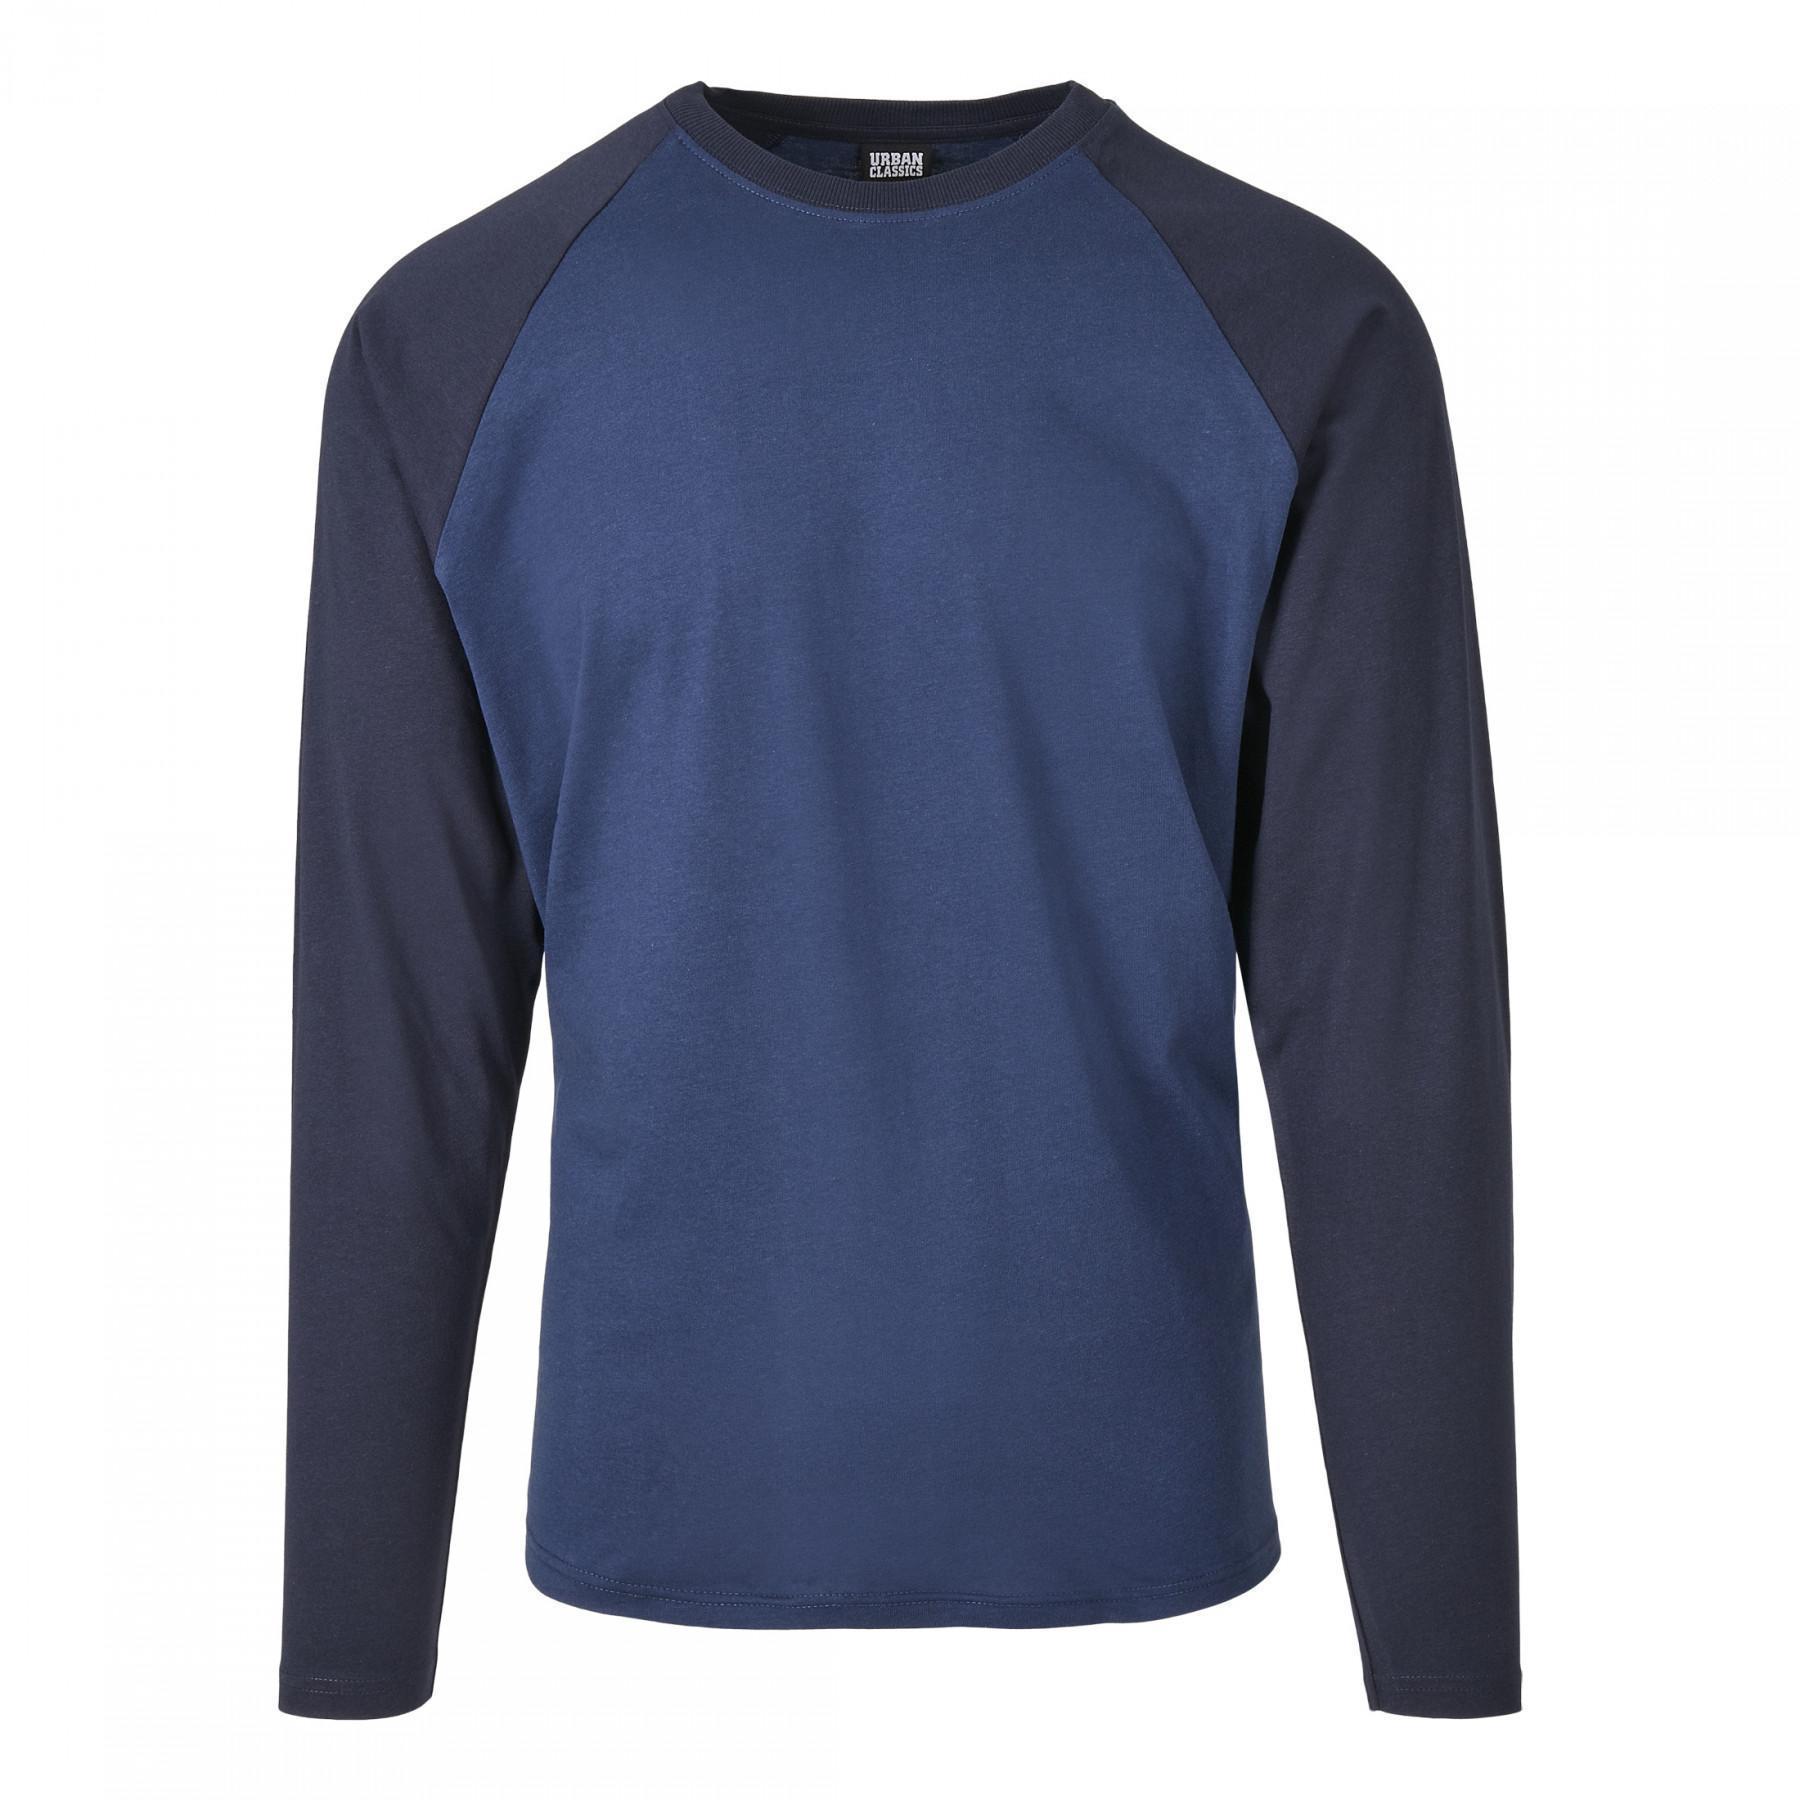 Langarm-T-Shirt Urban Classics raglan contrast (grandes tailles)